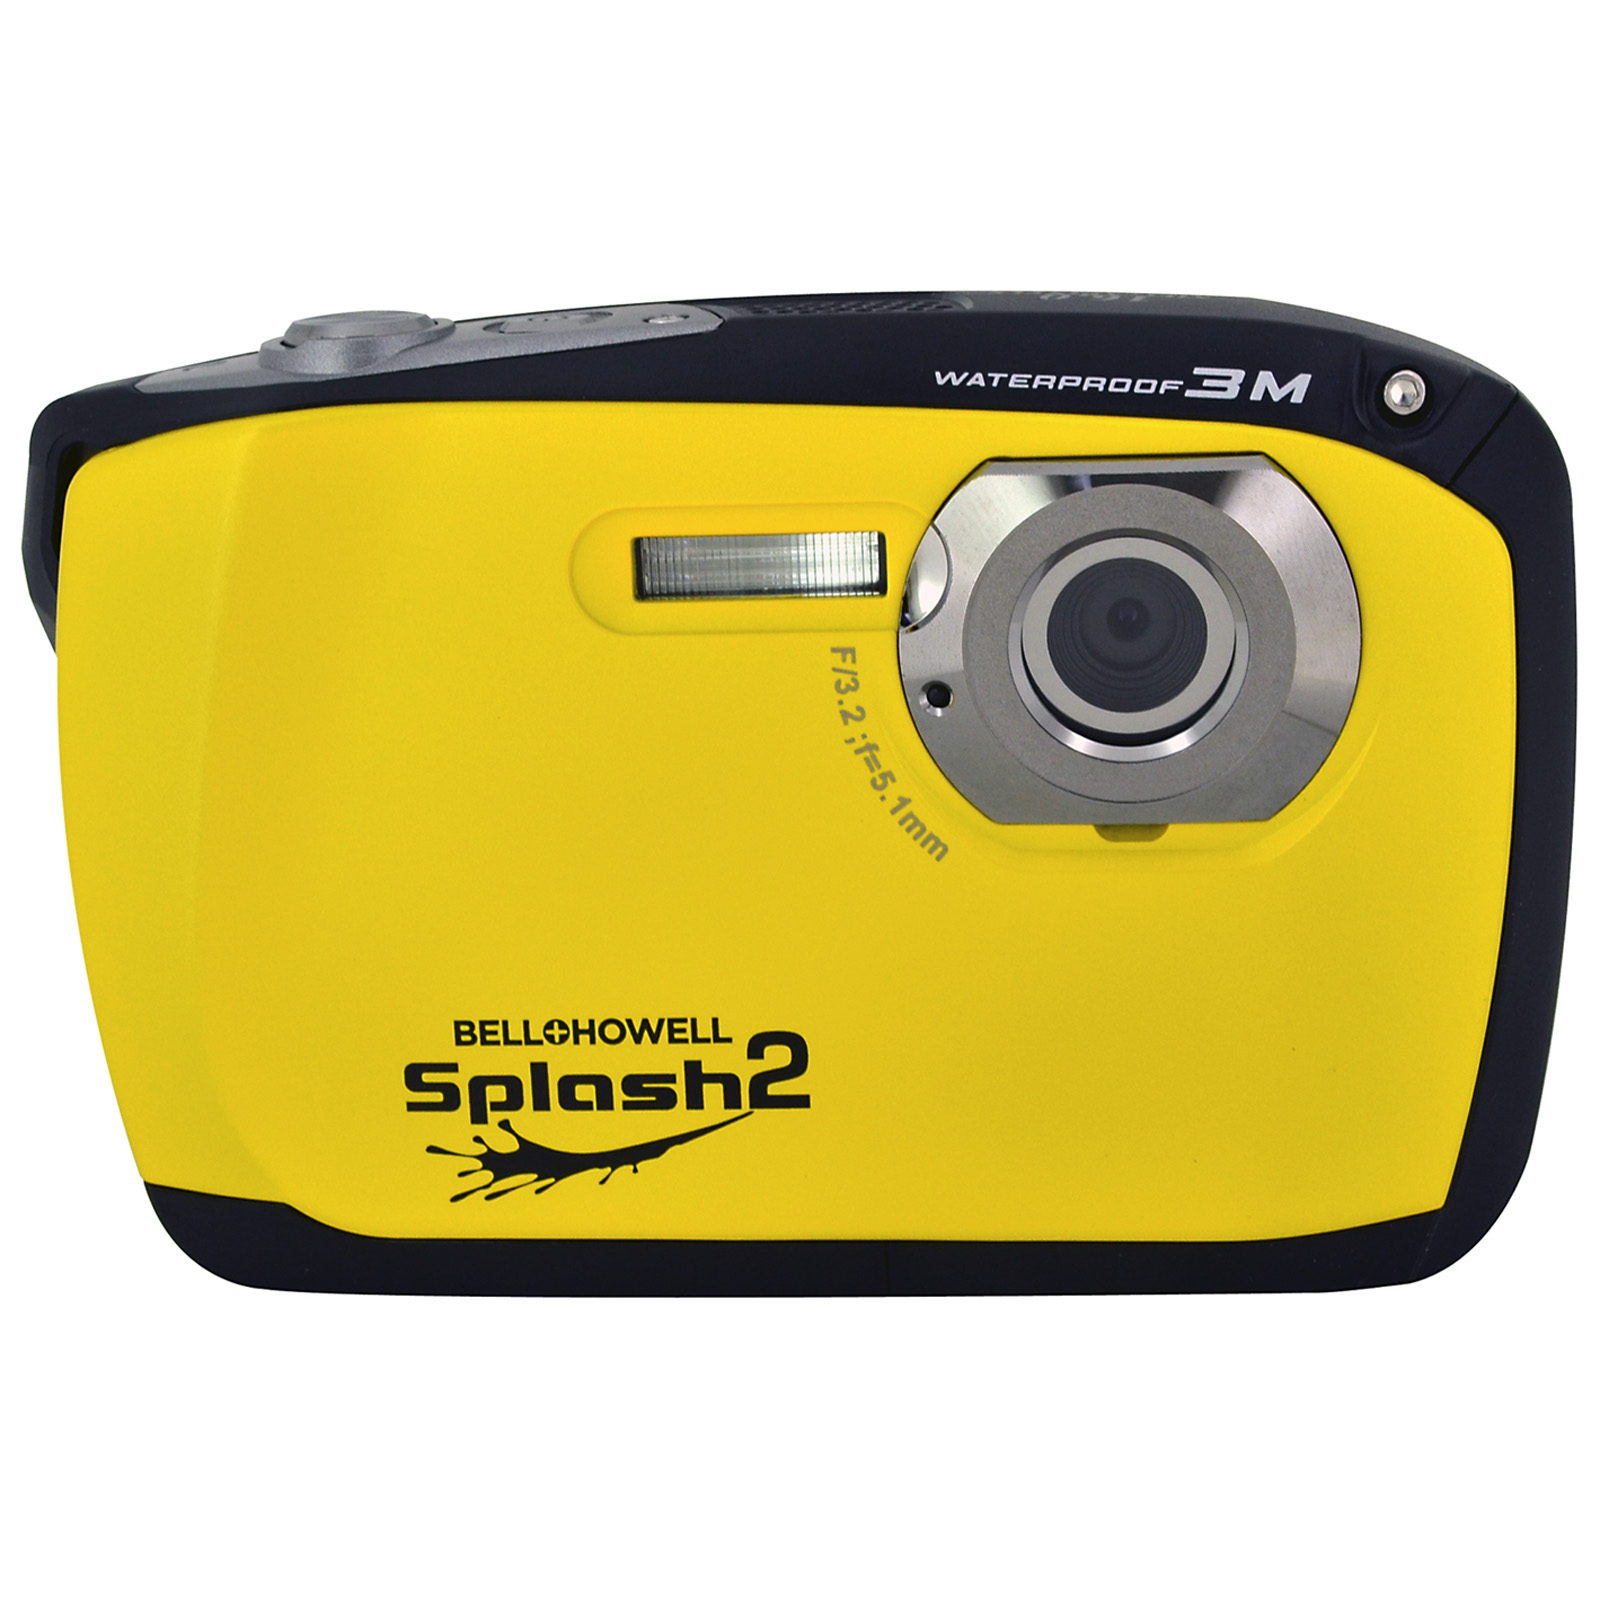 Bell+howell Splash2 16MP Waterproof Digital Camera w/HD Video (Yellow)